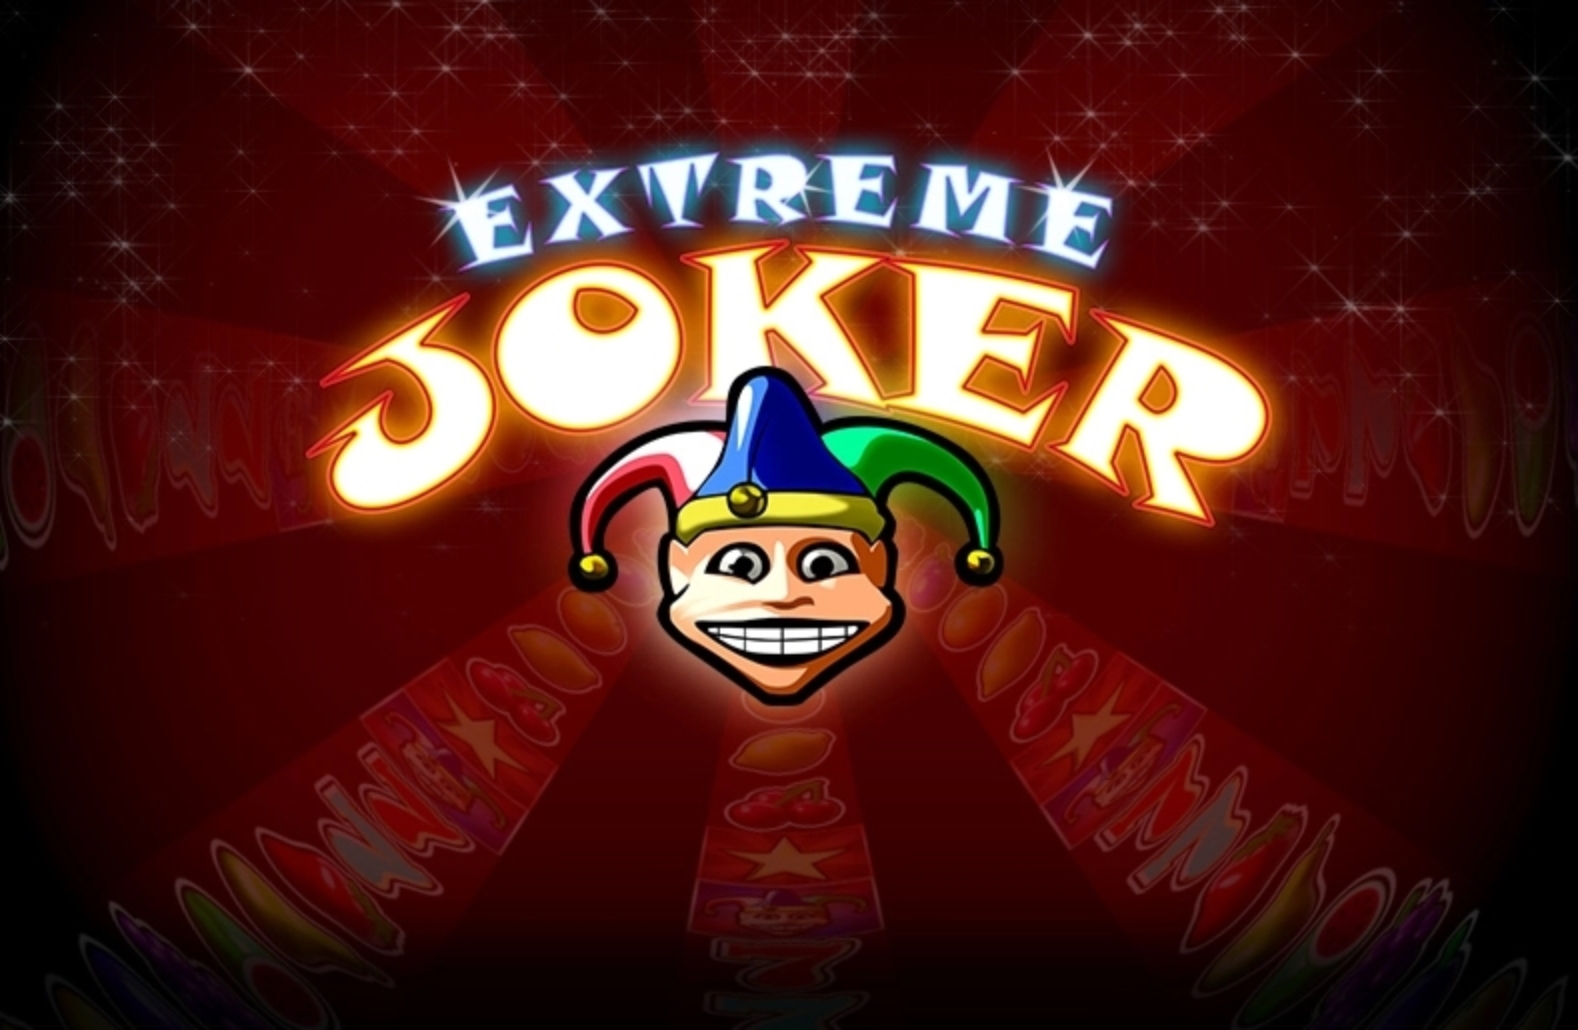 Extreme Joker demo